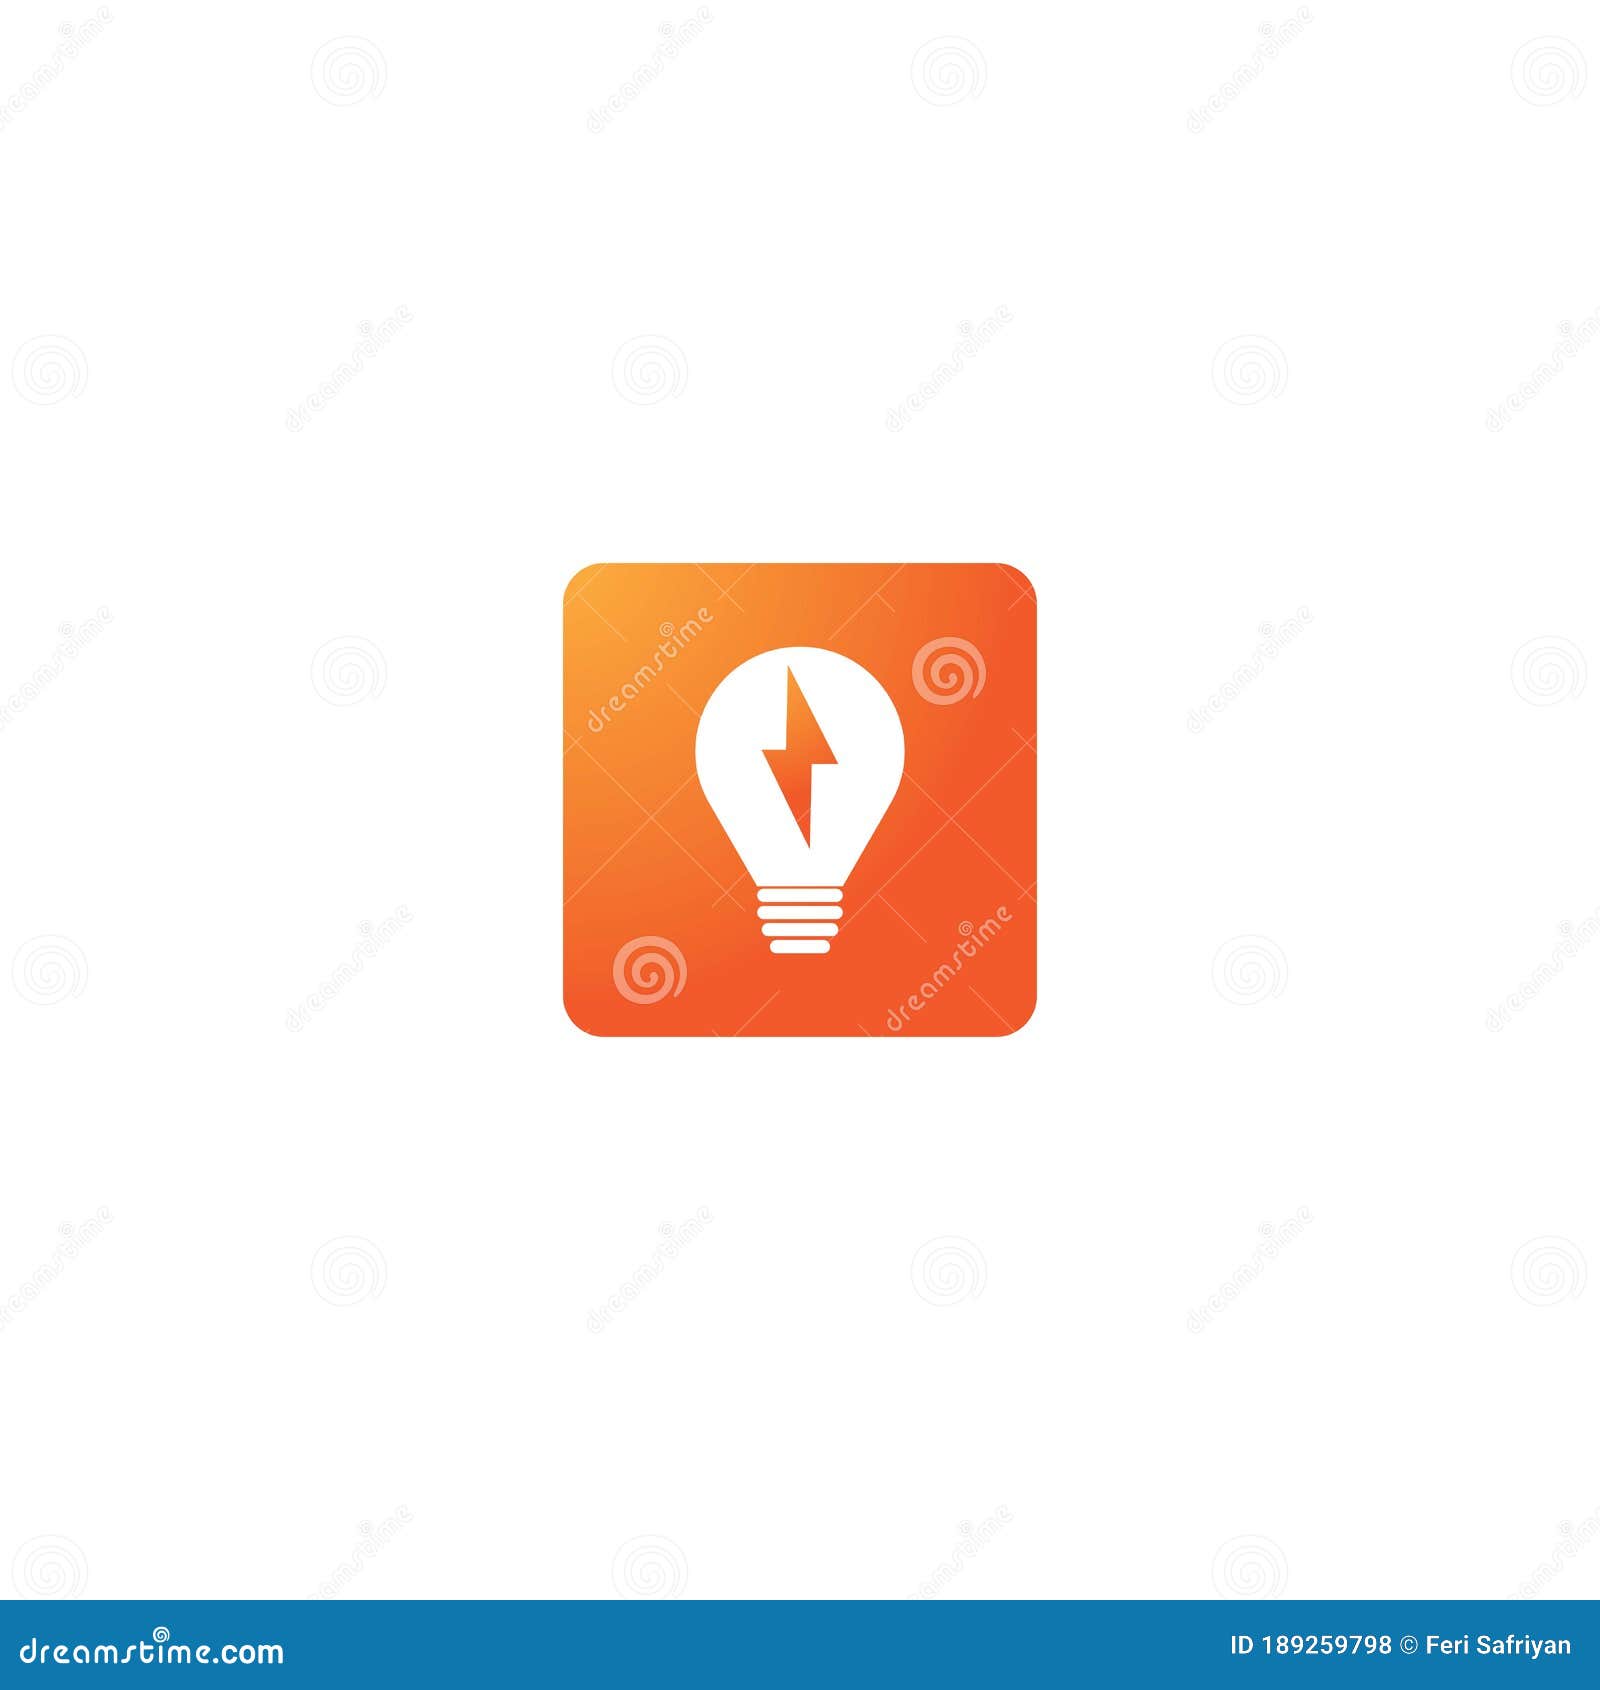 lamp logo  icon